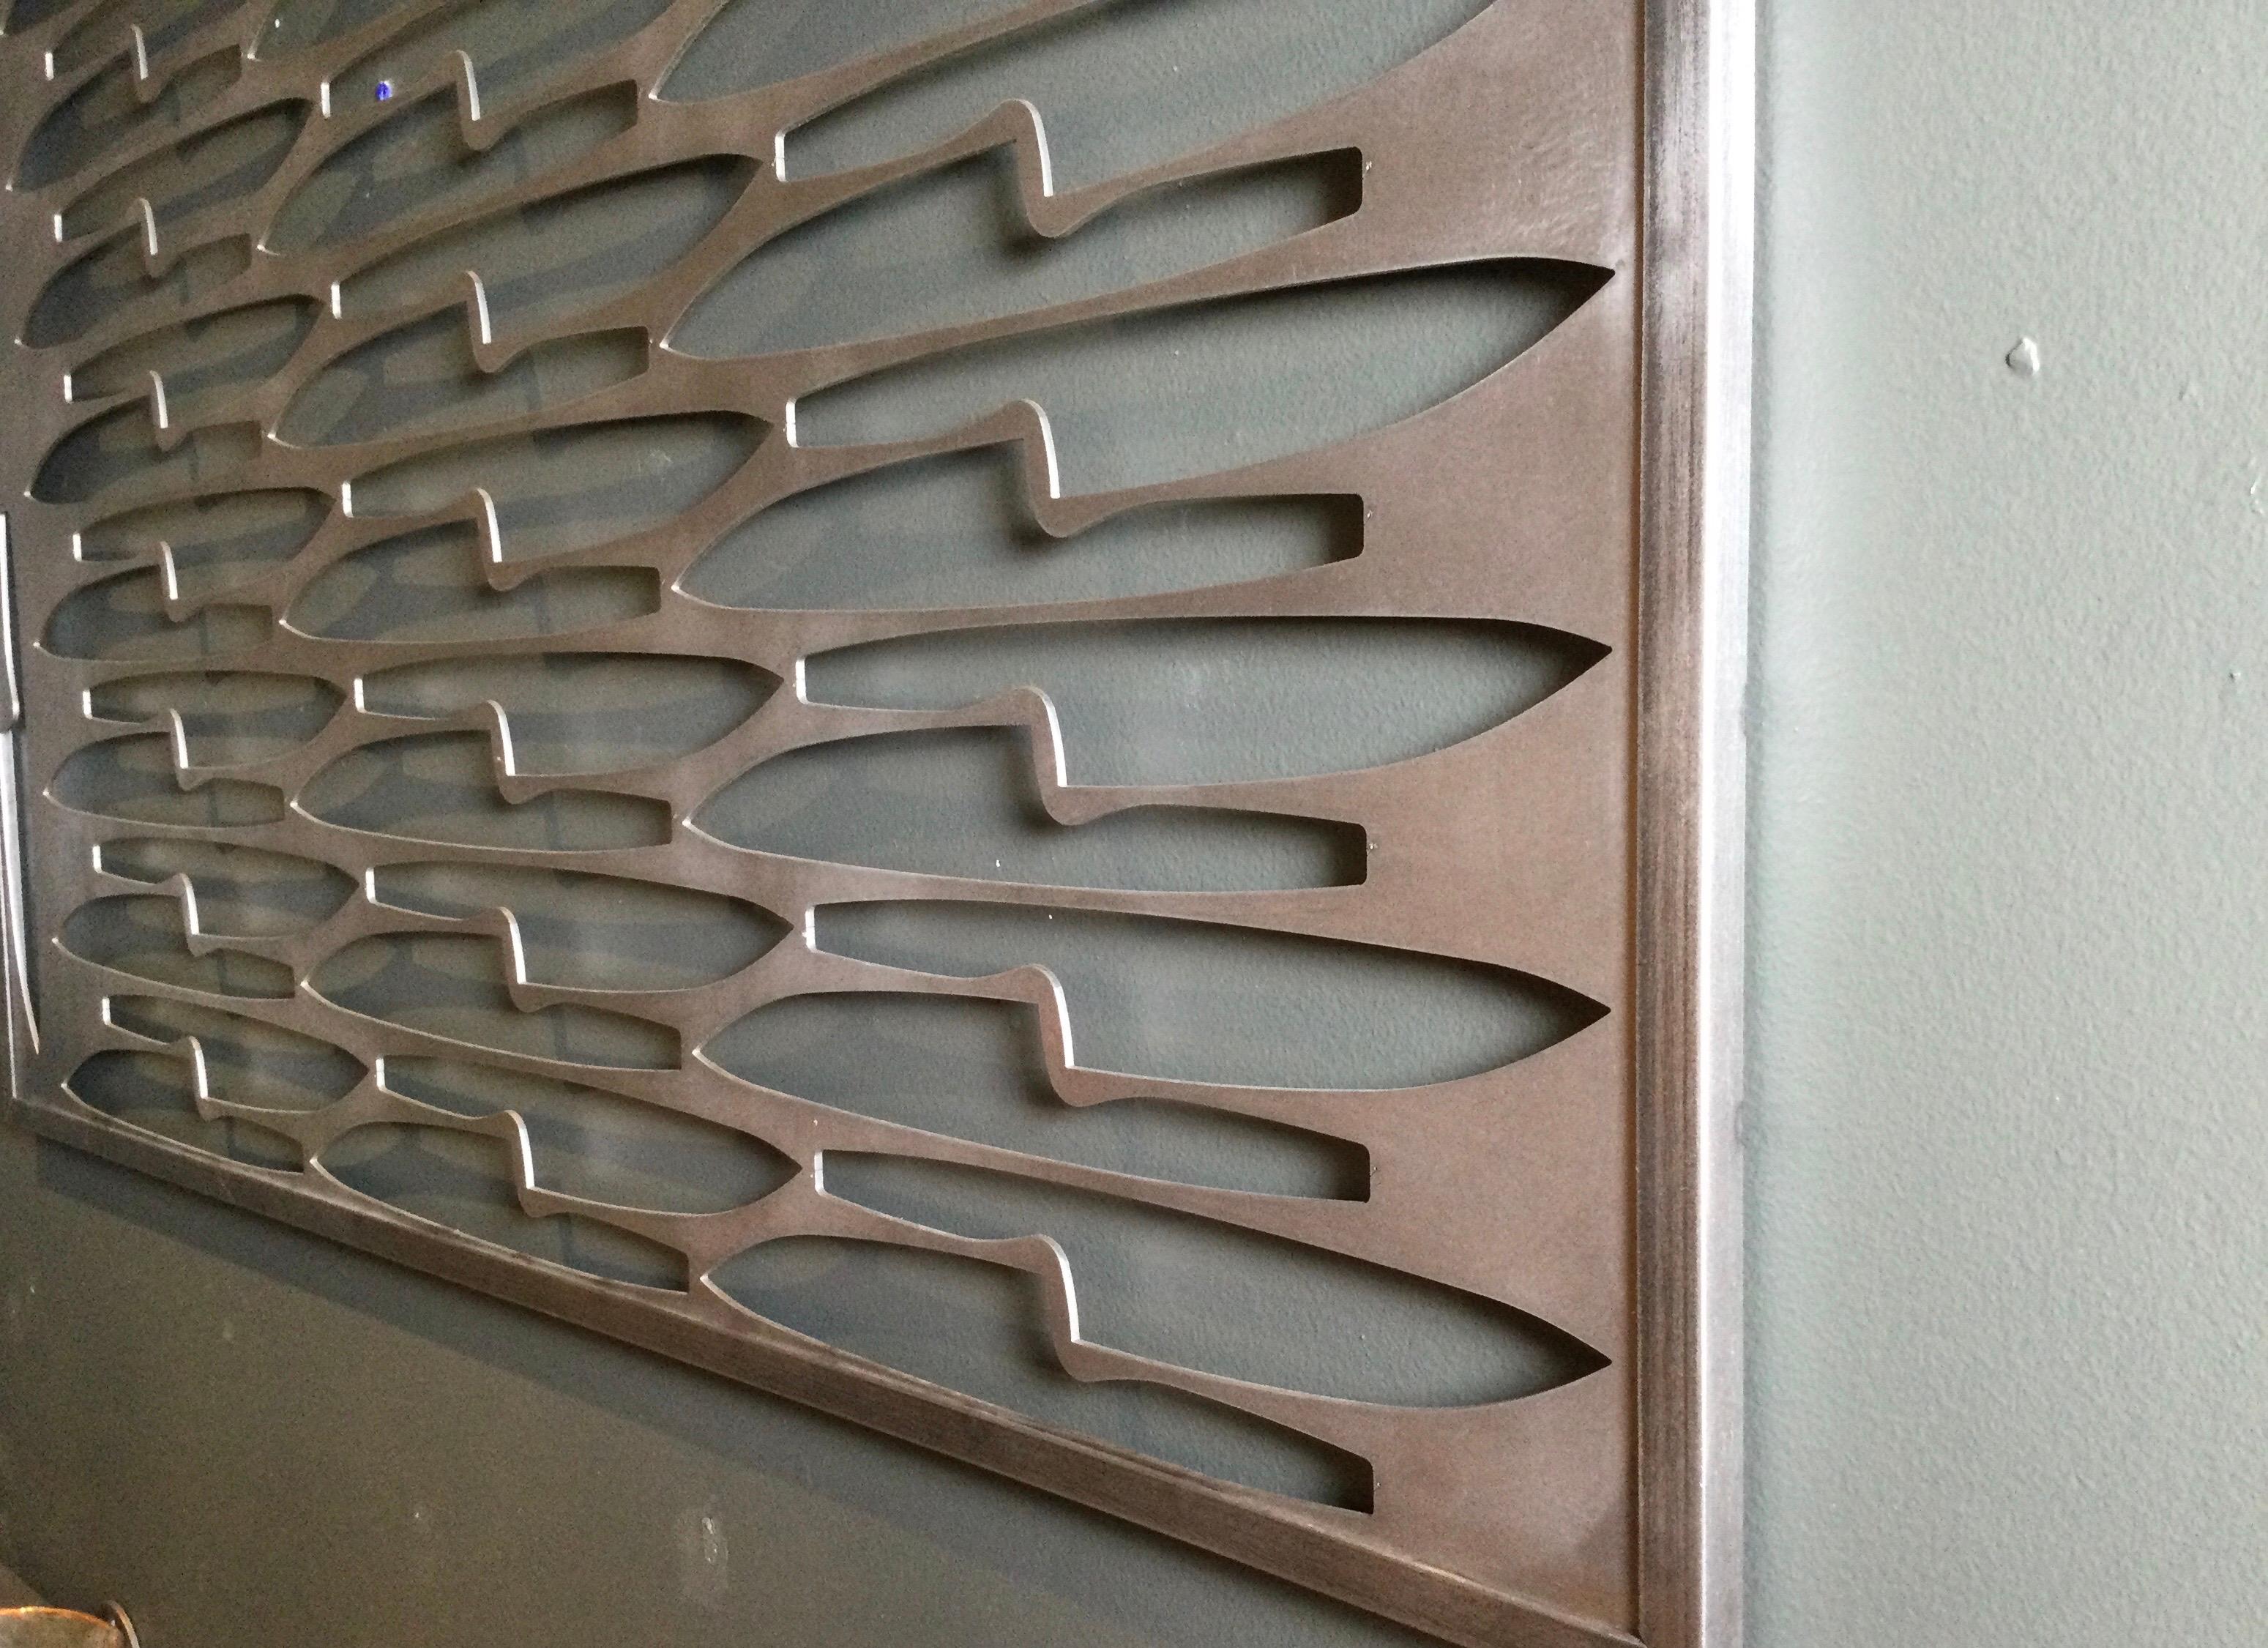 Stamped Steel Knife Sculptural Wall Art 2